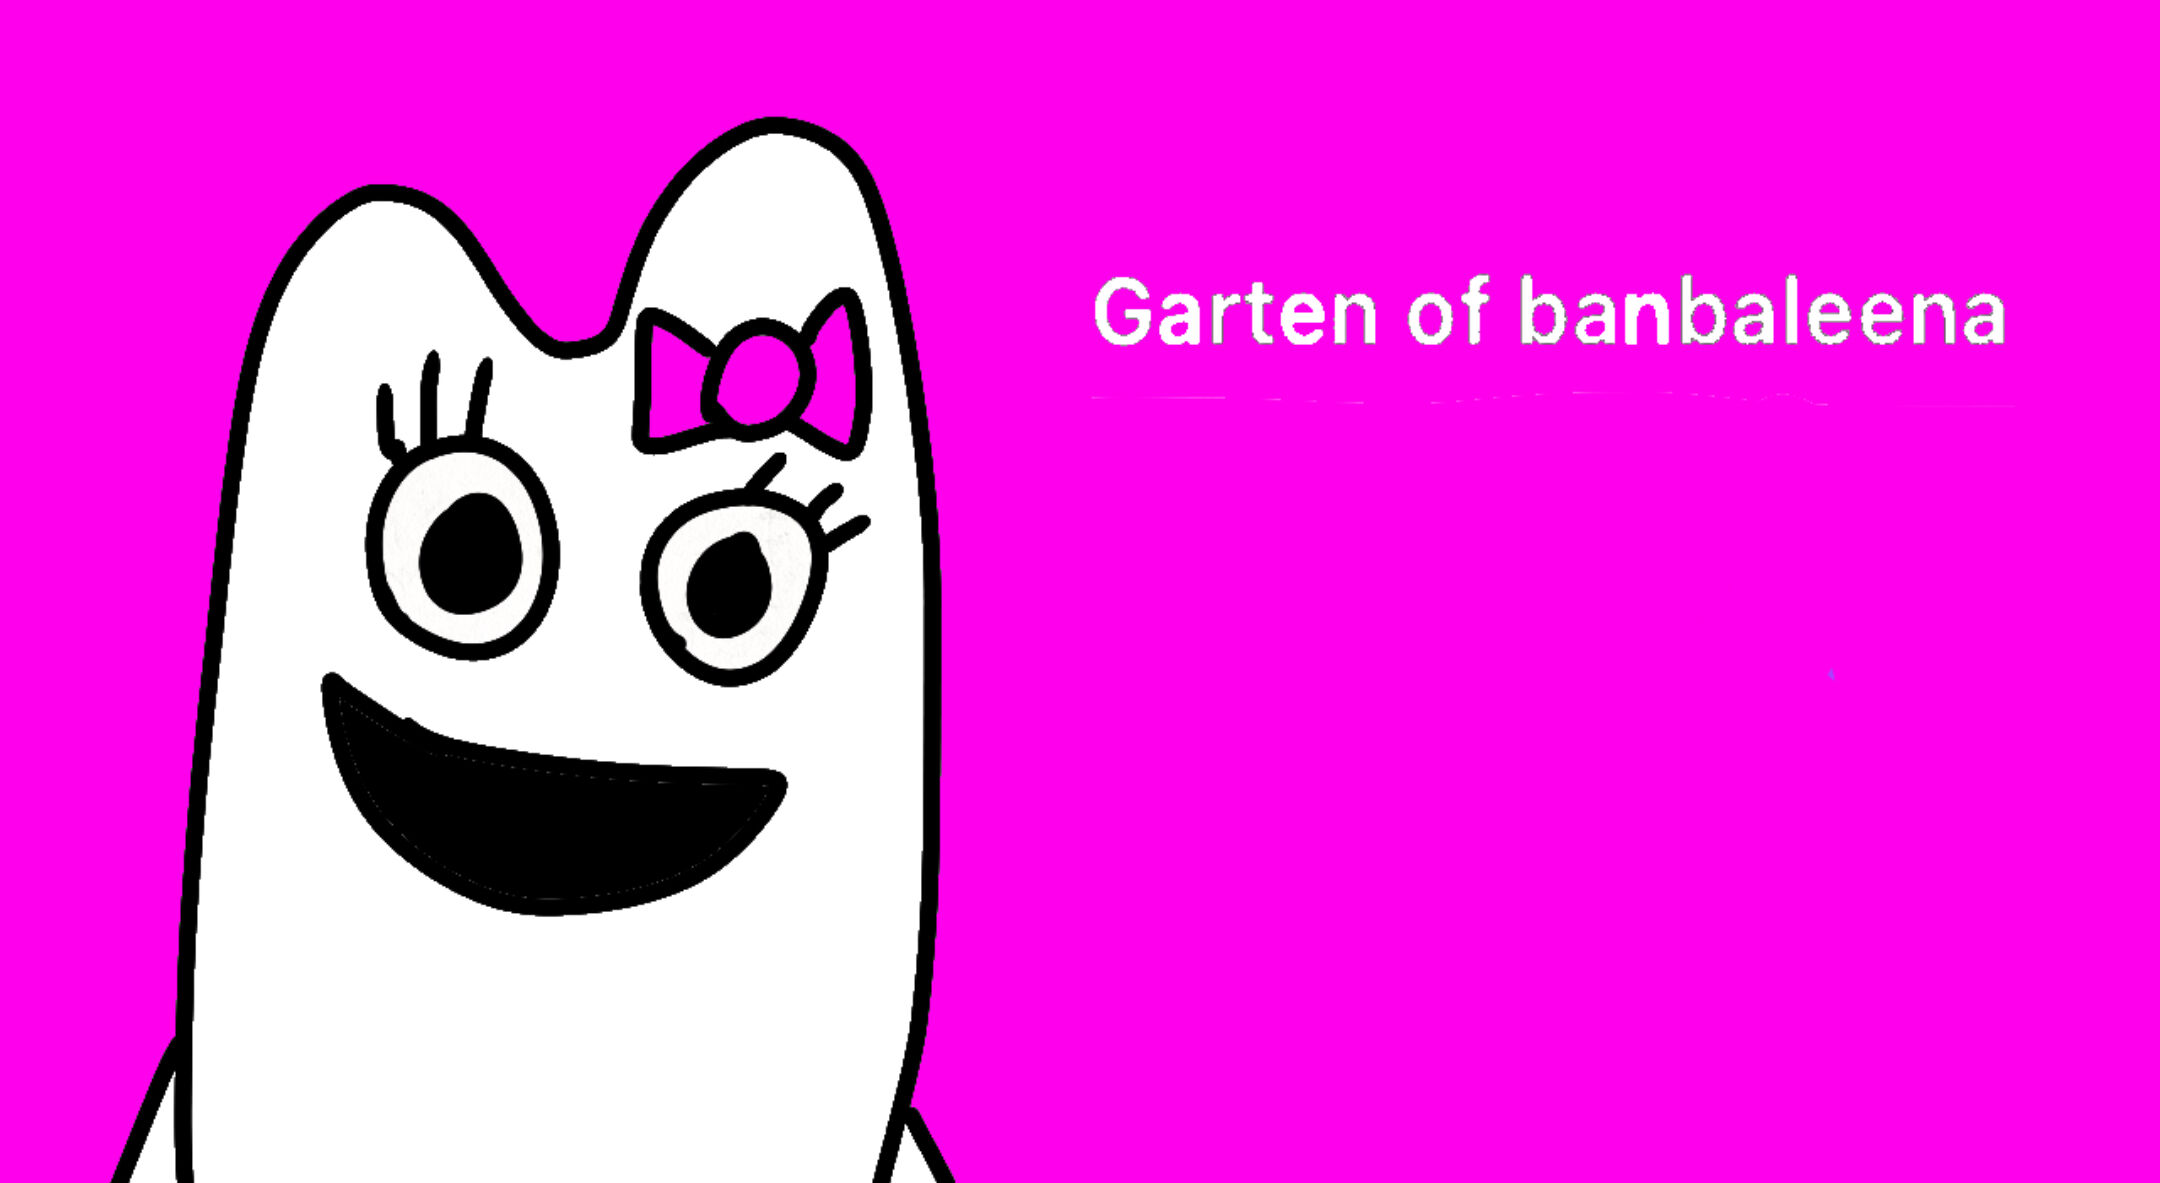 Robot Banbaleena, Garten of Banban Fanon Wiki